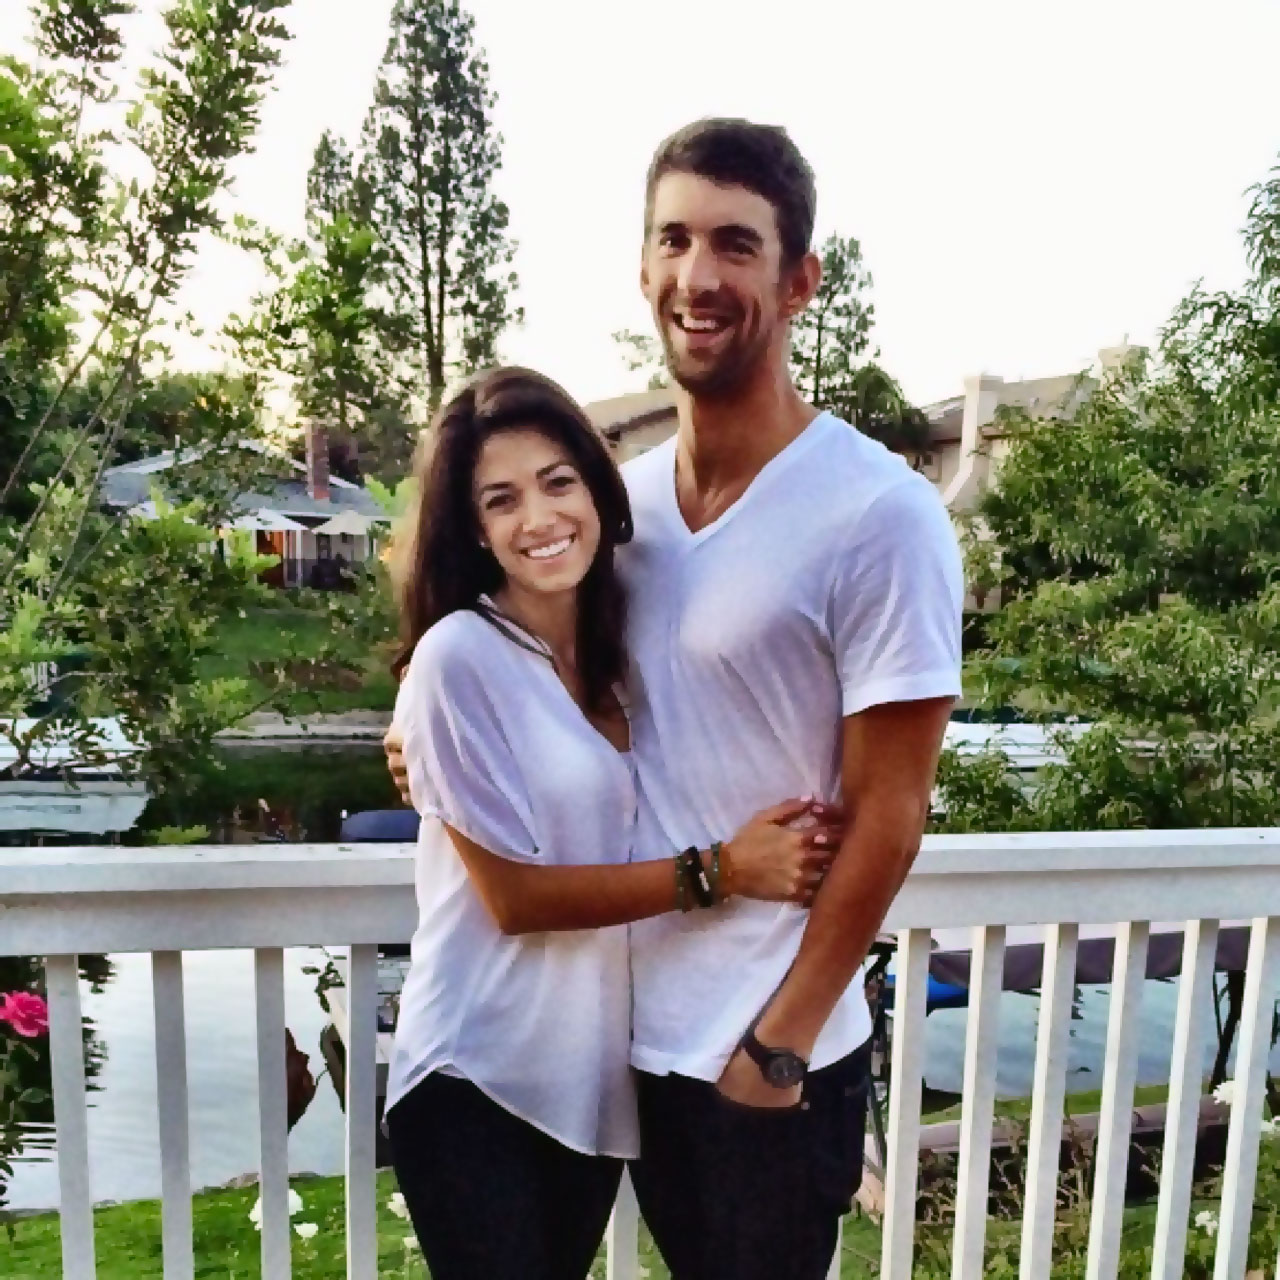 Miss California Nicole Johnson engaged to Michael Phelps